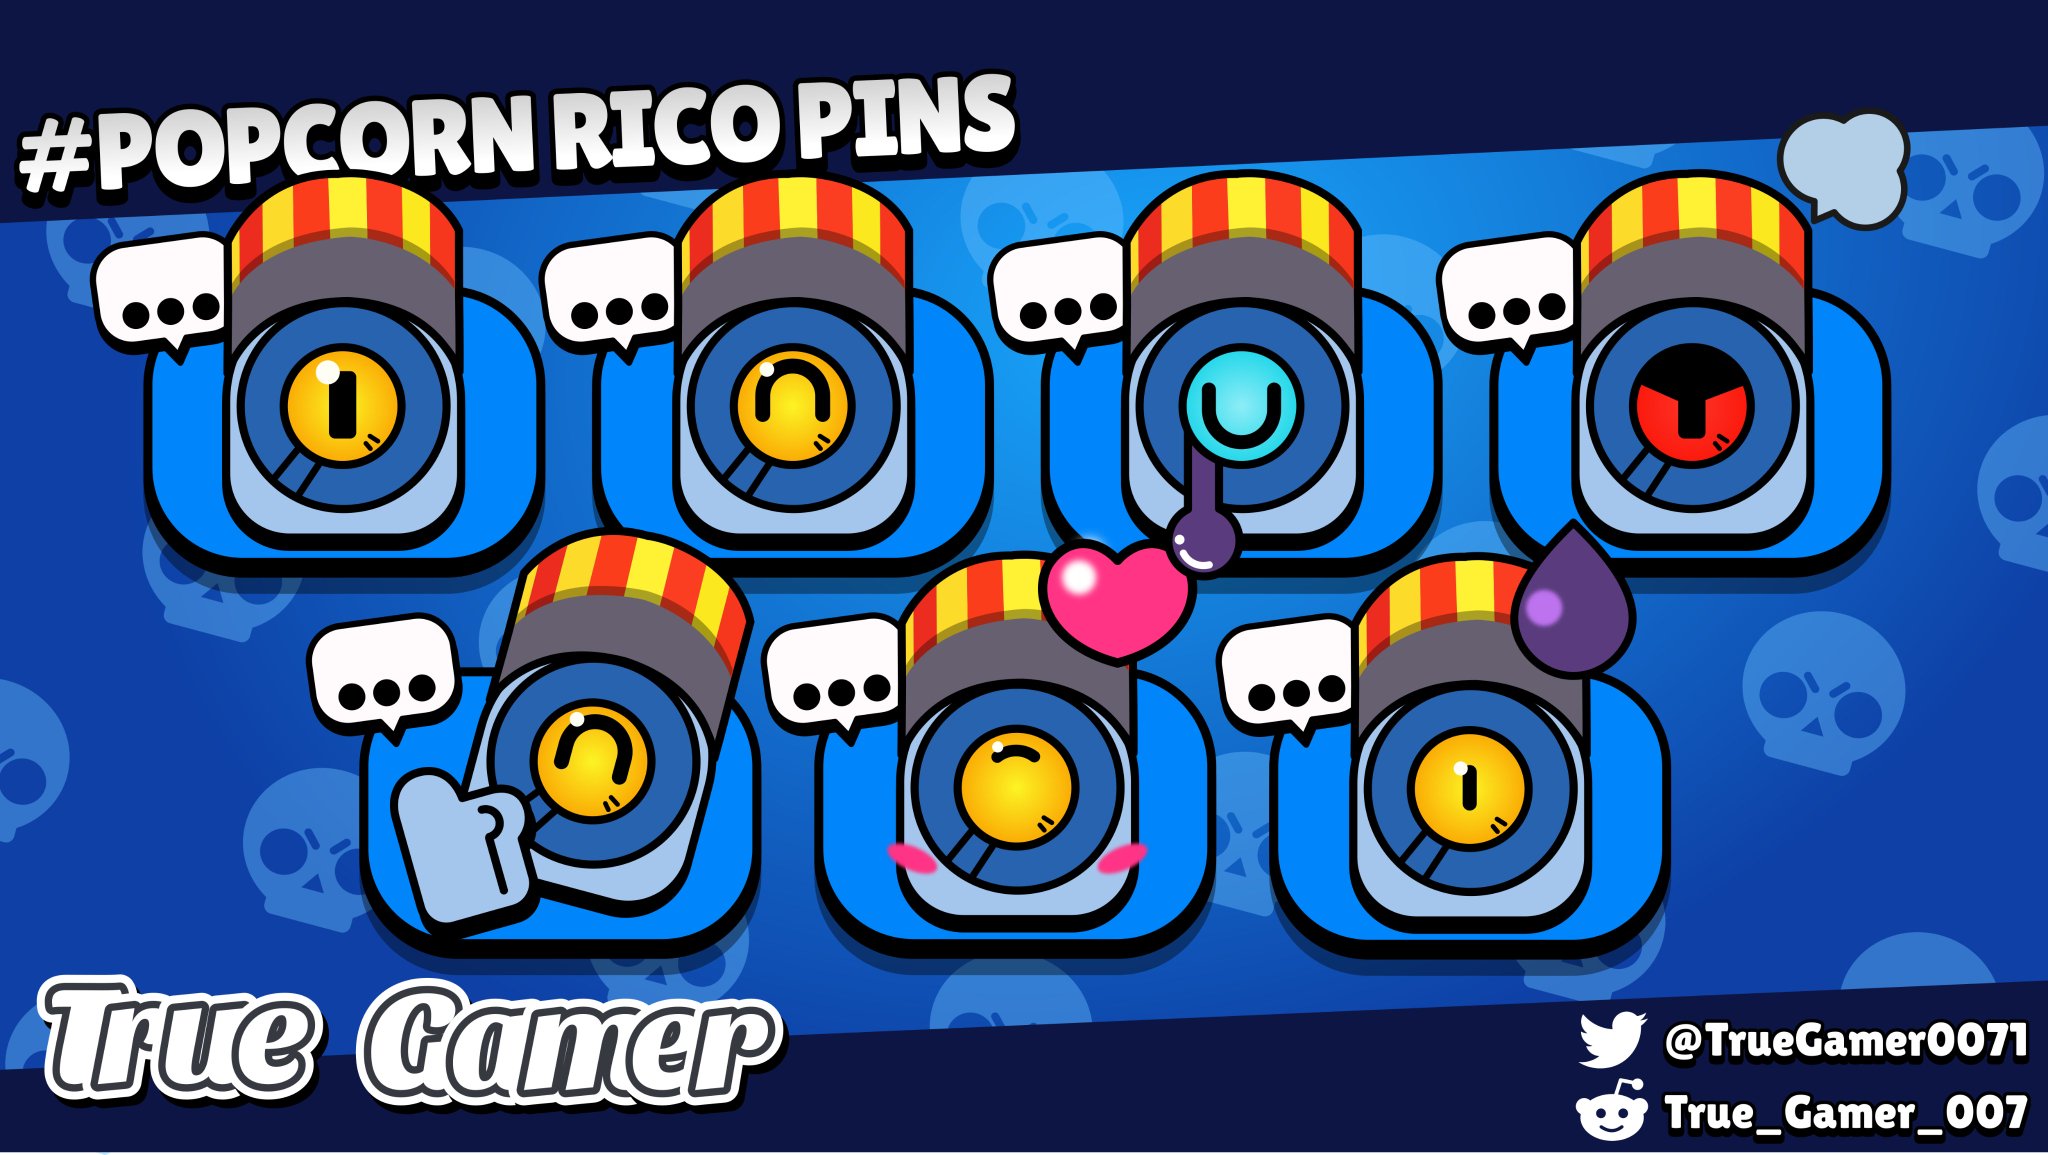 Truegamer007 On Twitter Brawlstars Brawlerpins Popcornrico Teamwork For The Win Popcorn Rico Pins Skin Count 56 108 - brawl stars angry pin